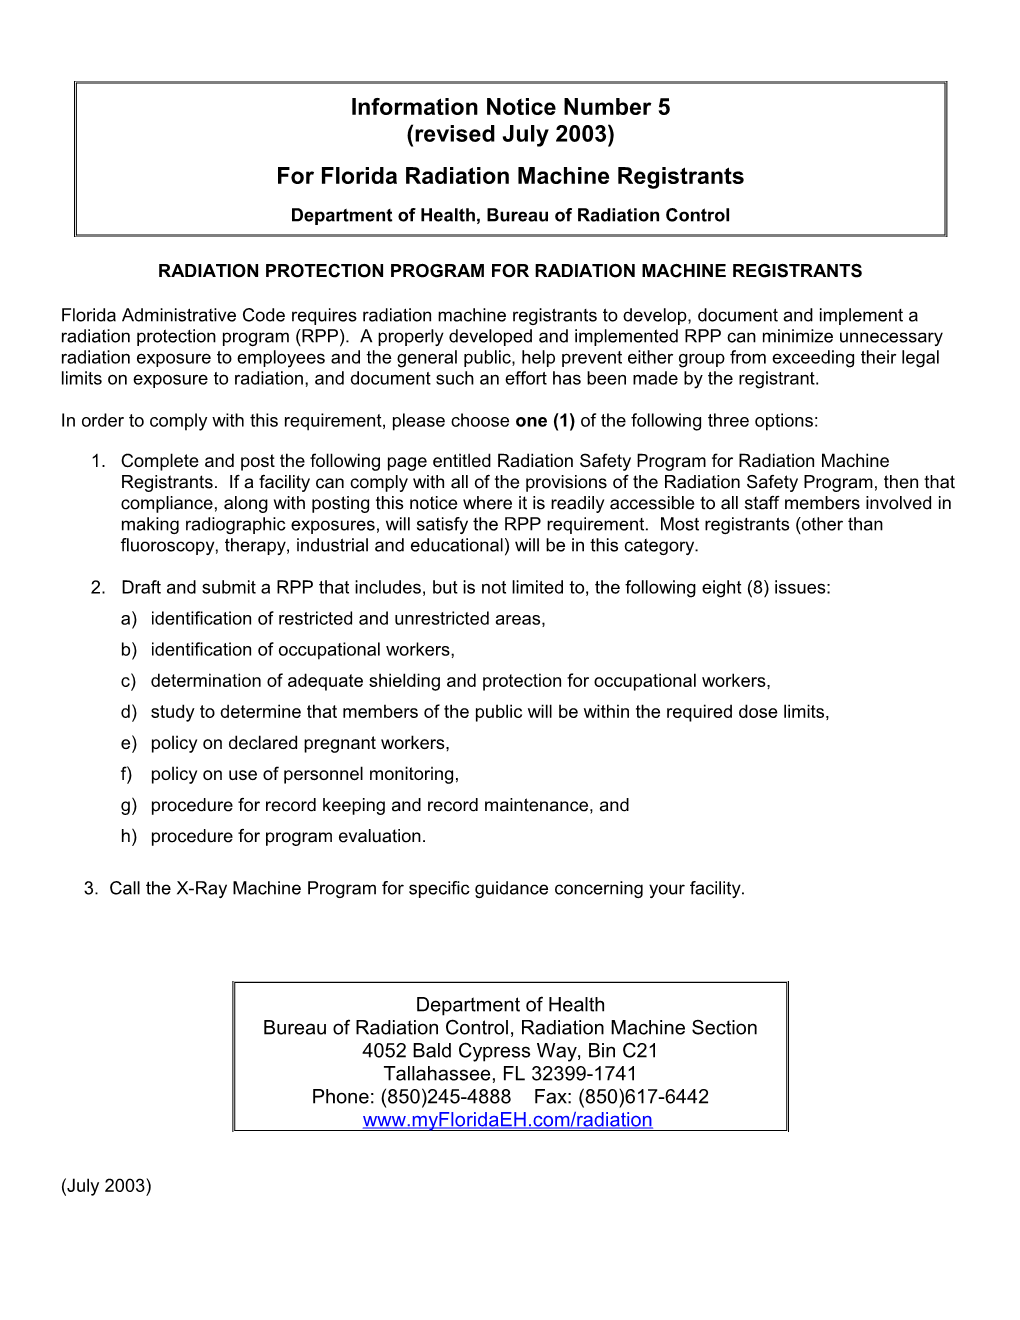 Radiation Protection Program for Radiation Machine Registrants